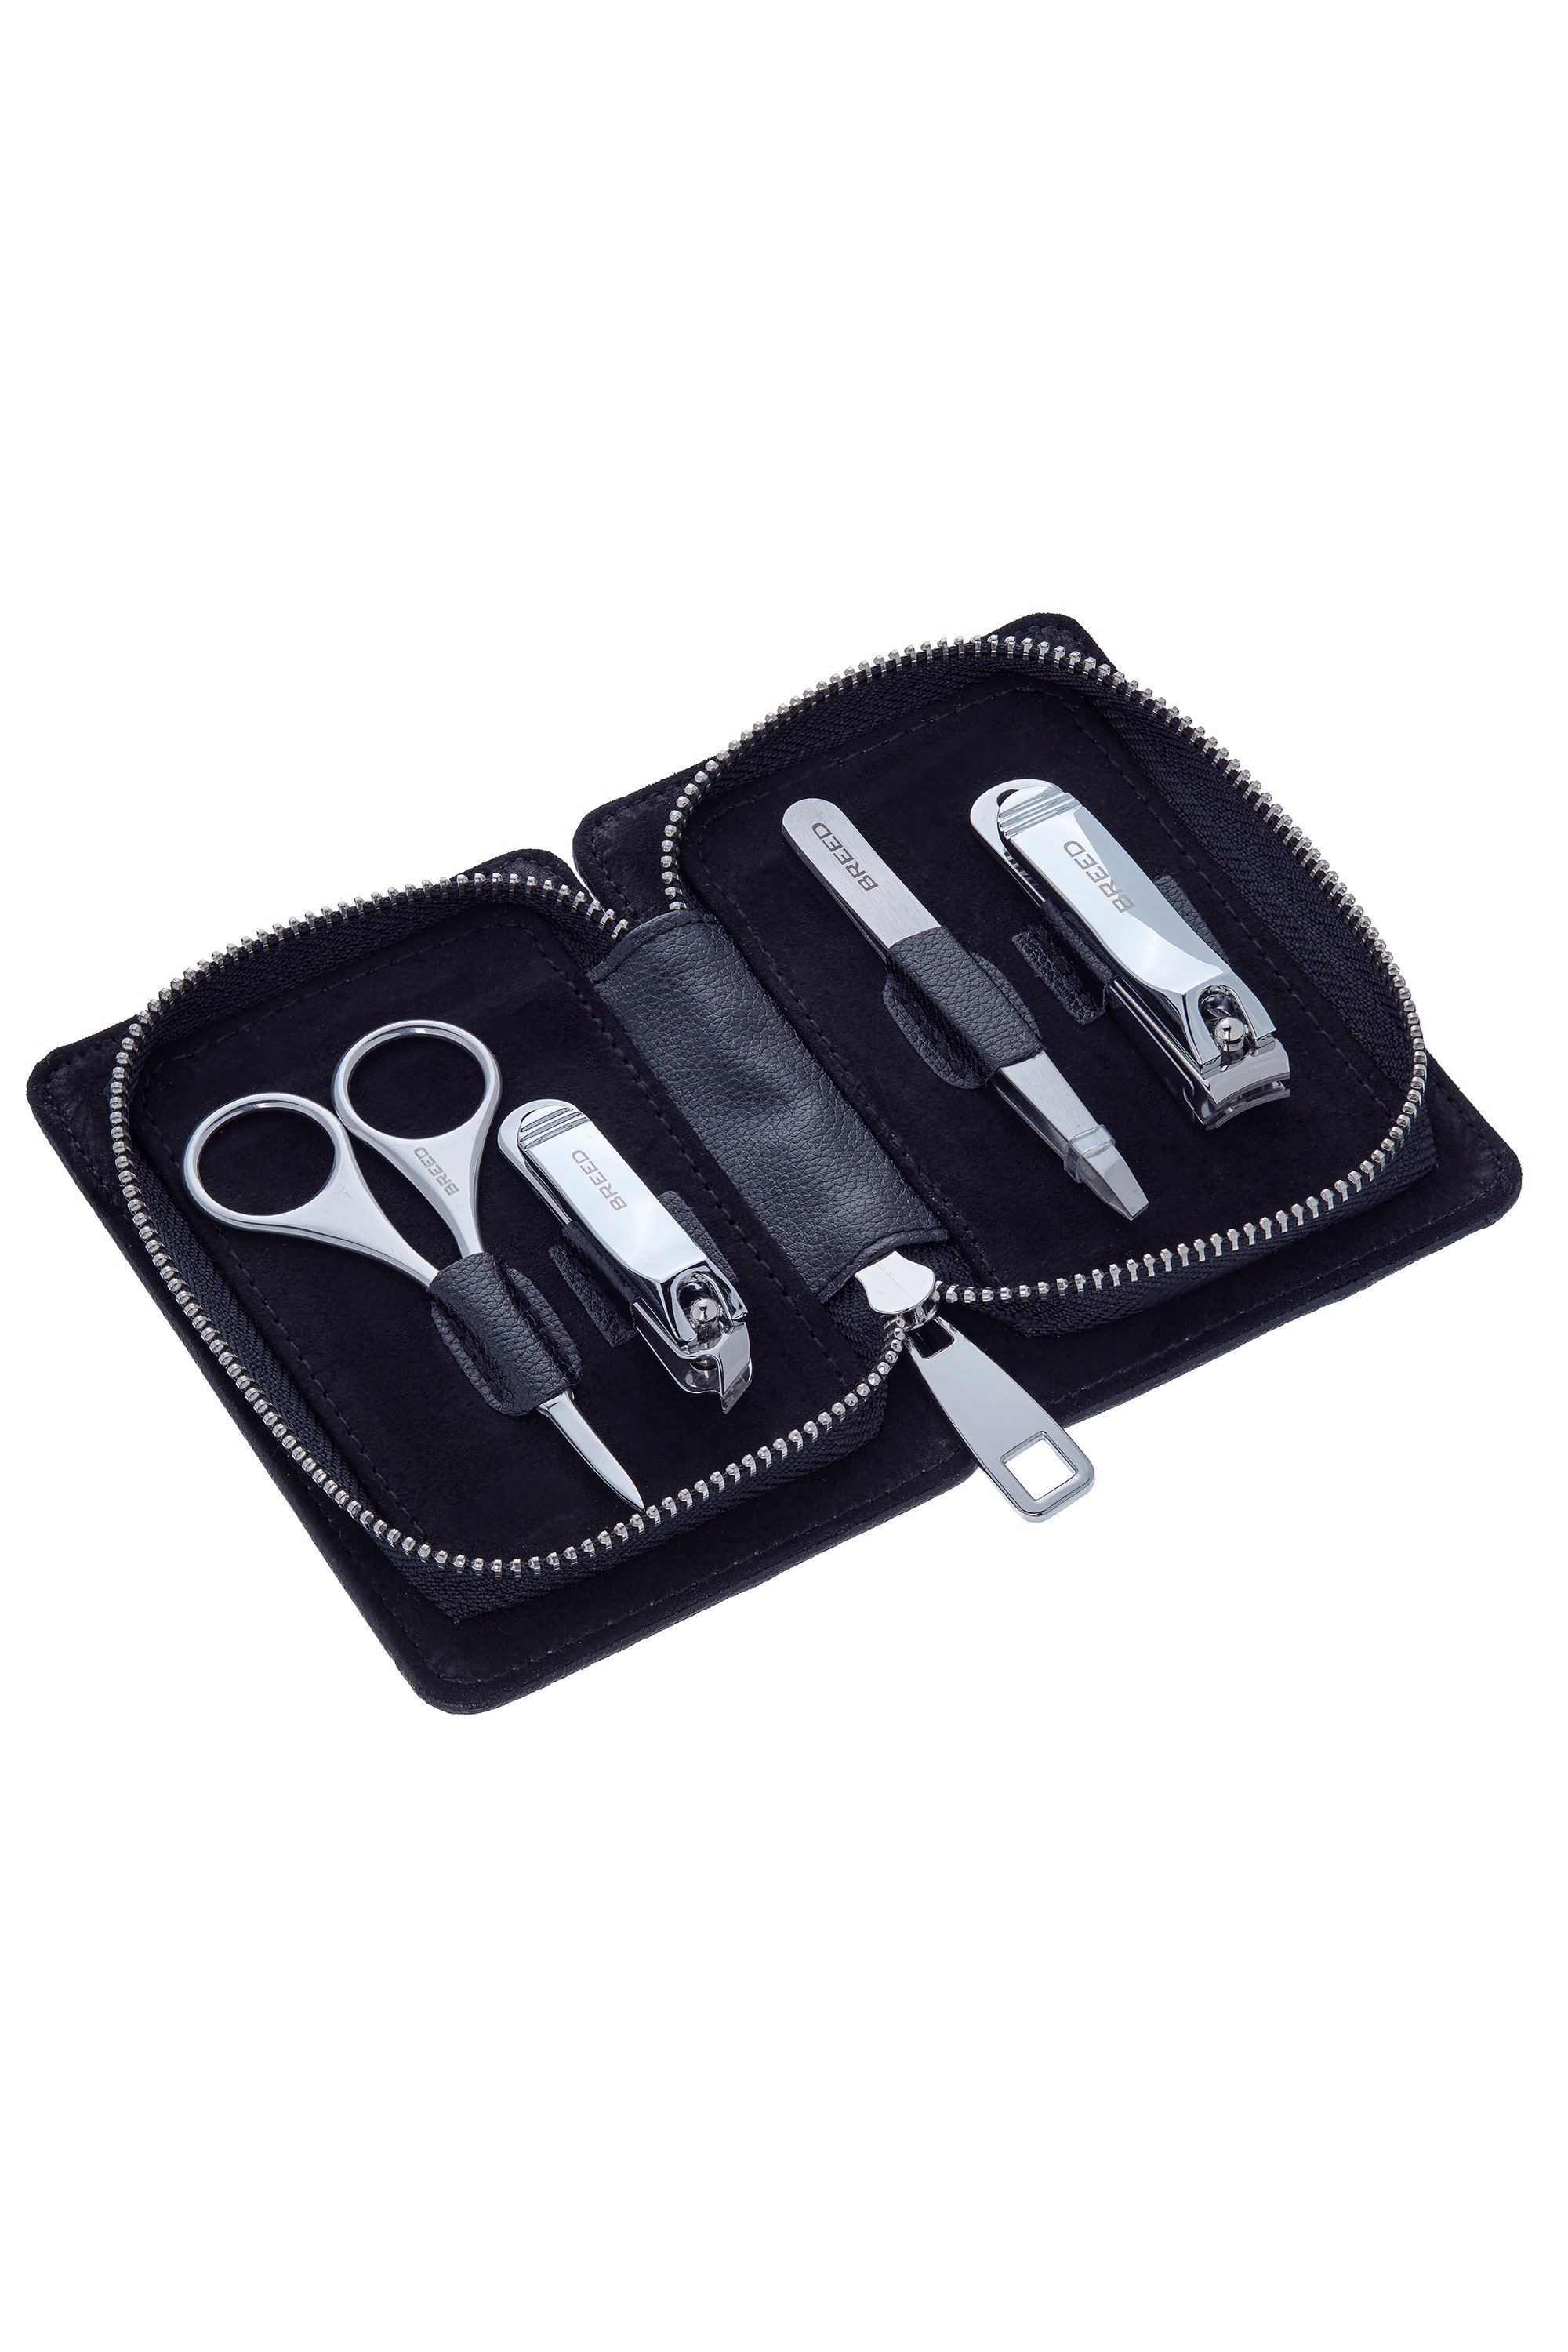 Sabre 4 Piece Surgical Steel Groom Kit -